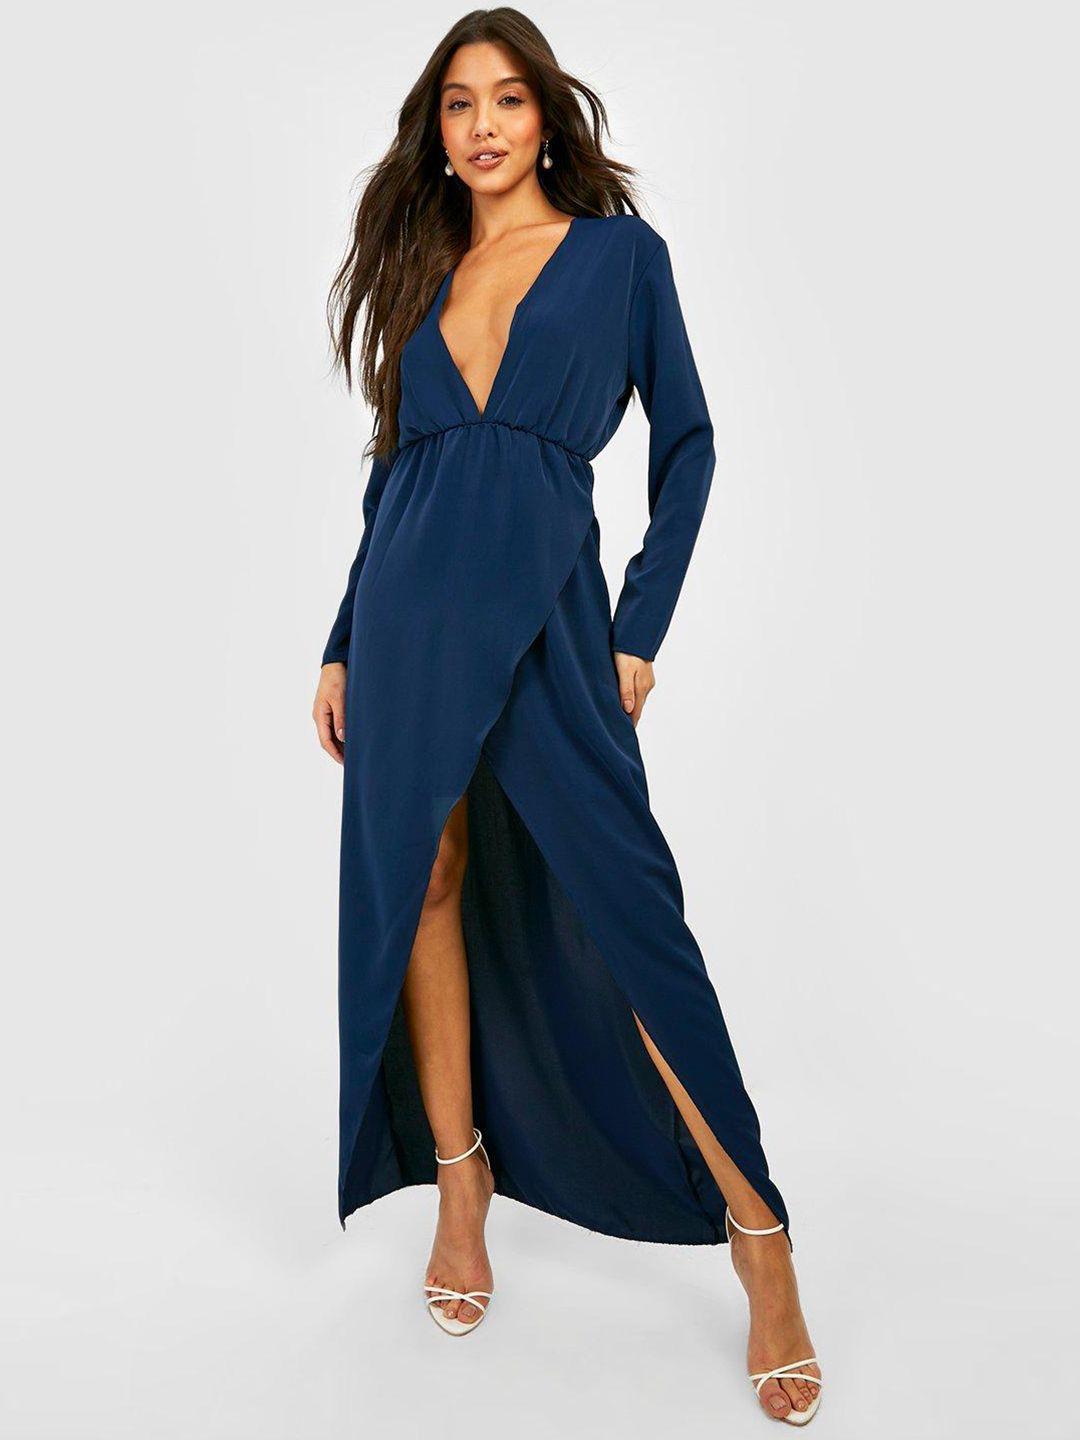 boohoo teal blue wrap long sleeve maxi dress